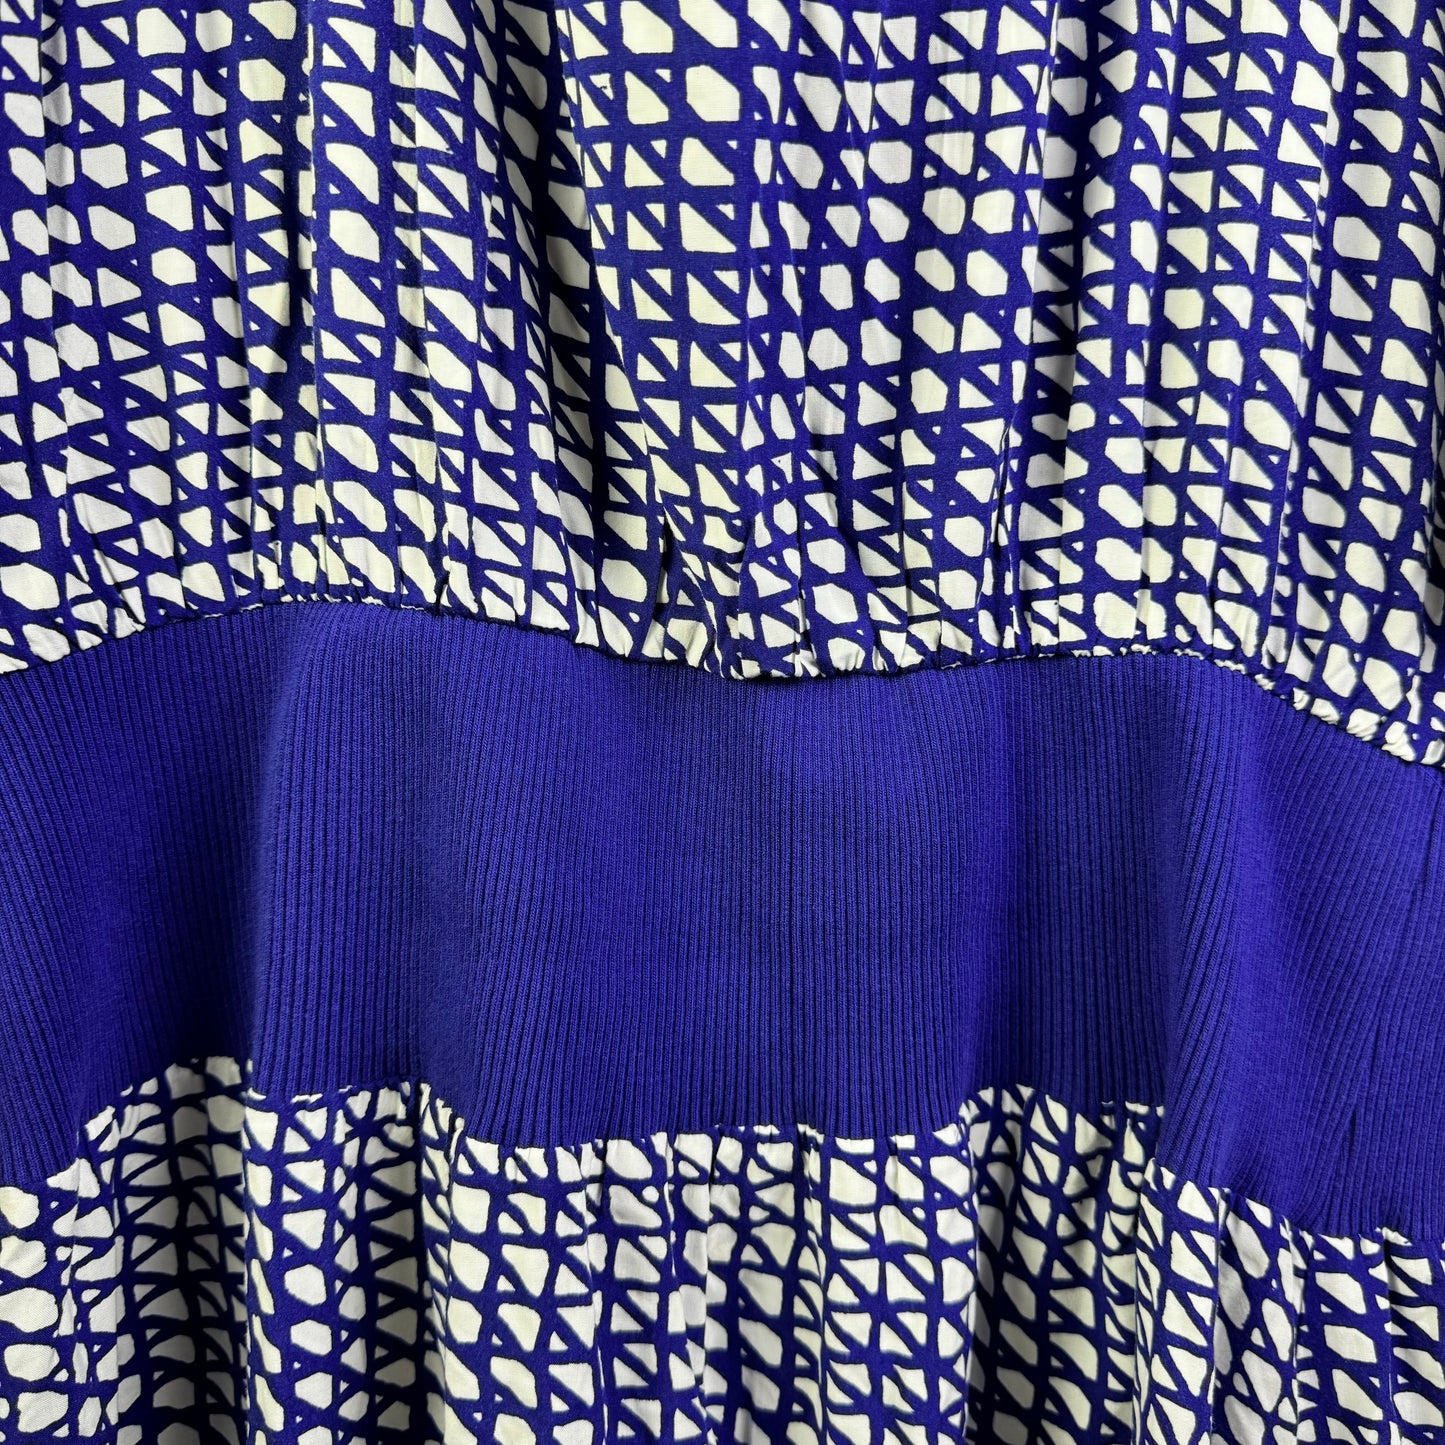 Blue Dress Casual Maxi Maeve, Size Xl